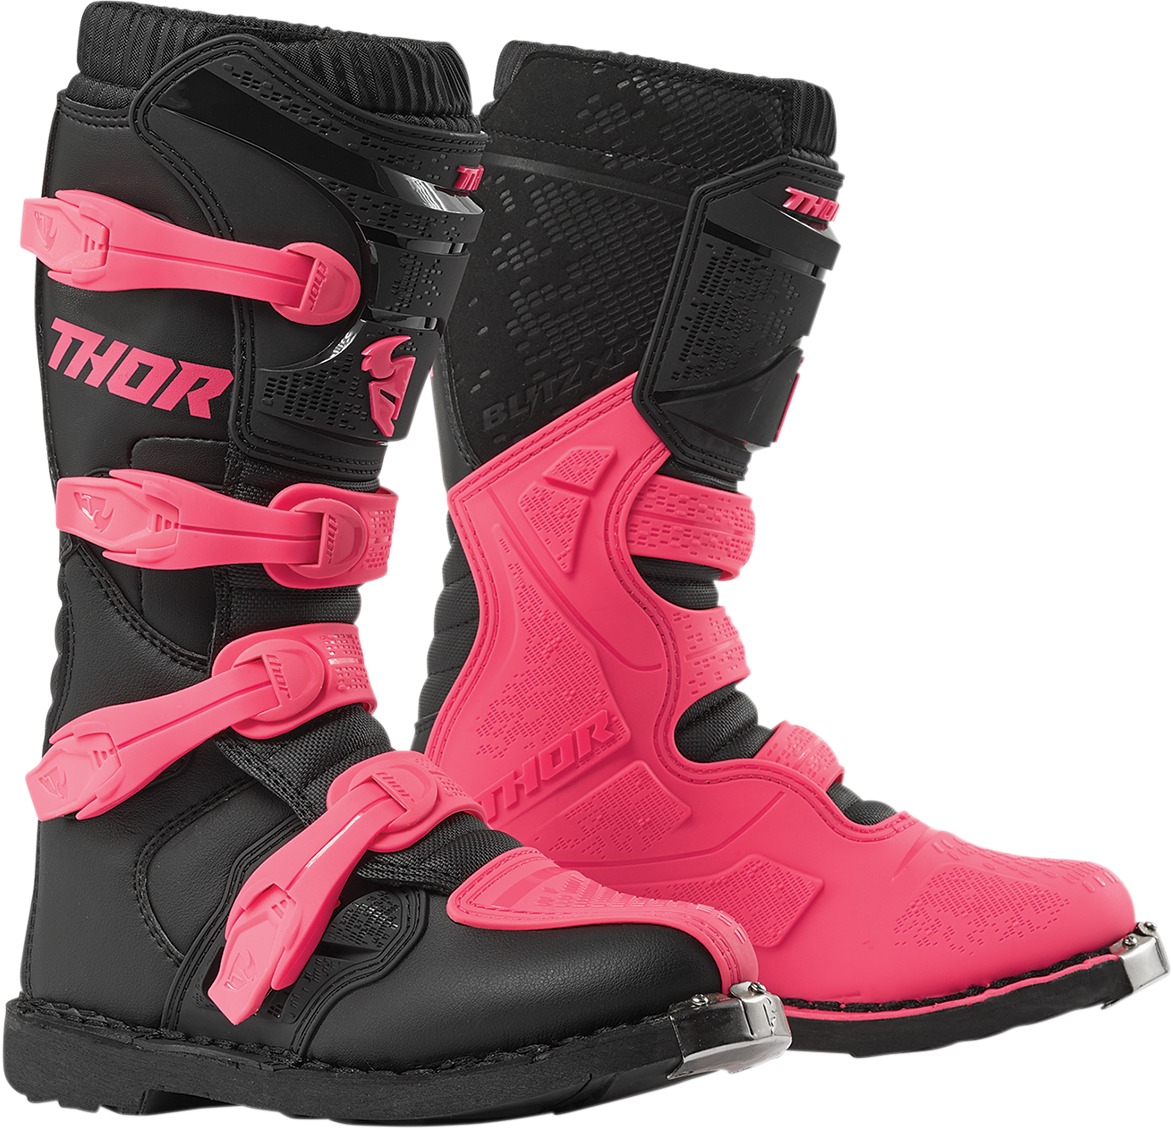 Blitz XP Dirt Bike Boots - Black & Pink Women's Size 7 - Click Image to Close